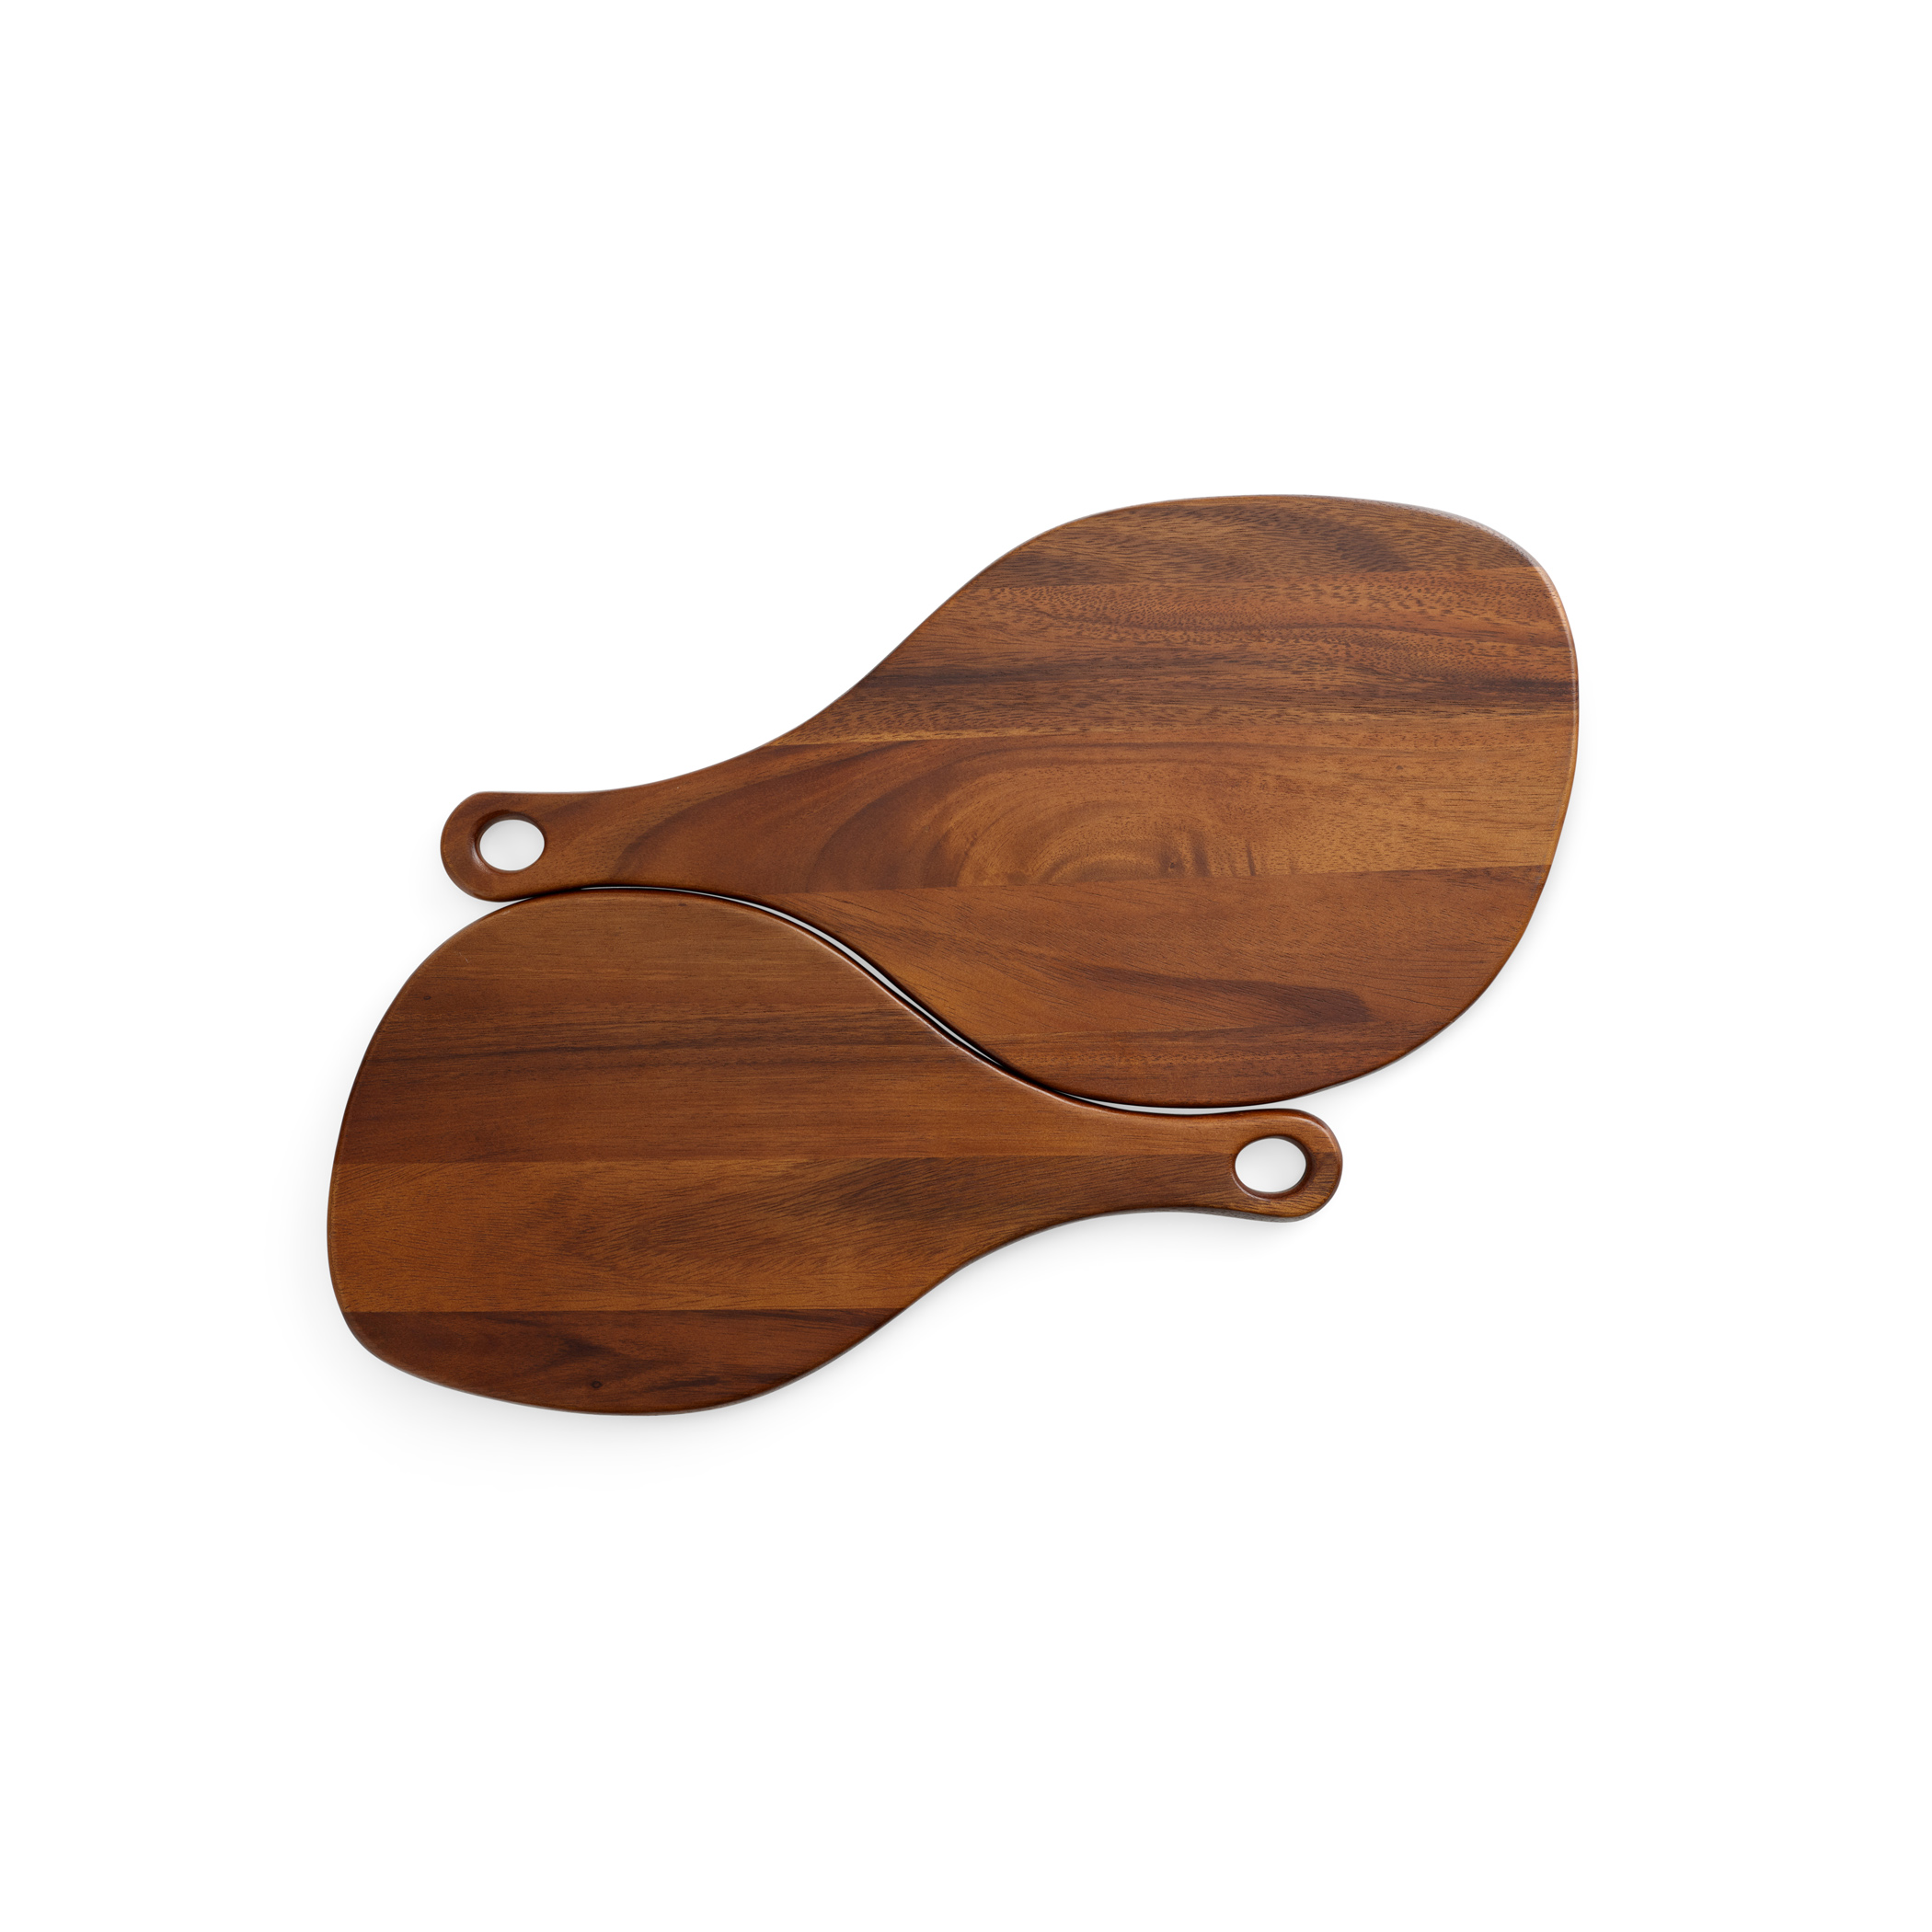 Nambé Portables Wood Cutting Board - Small